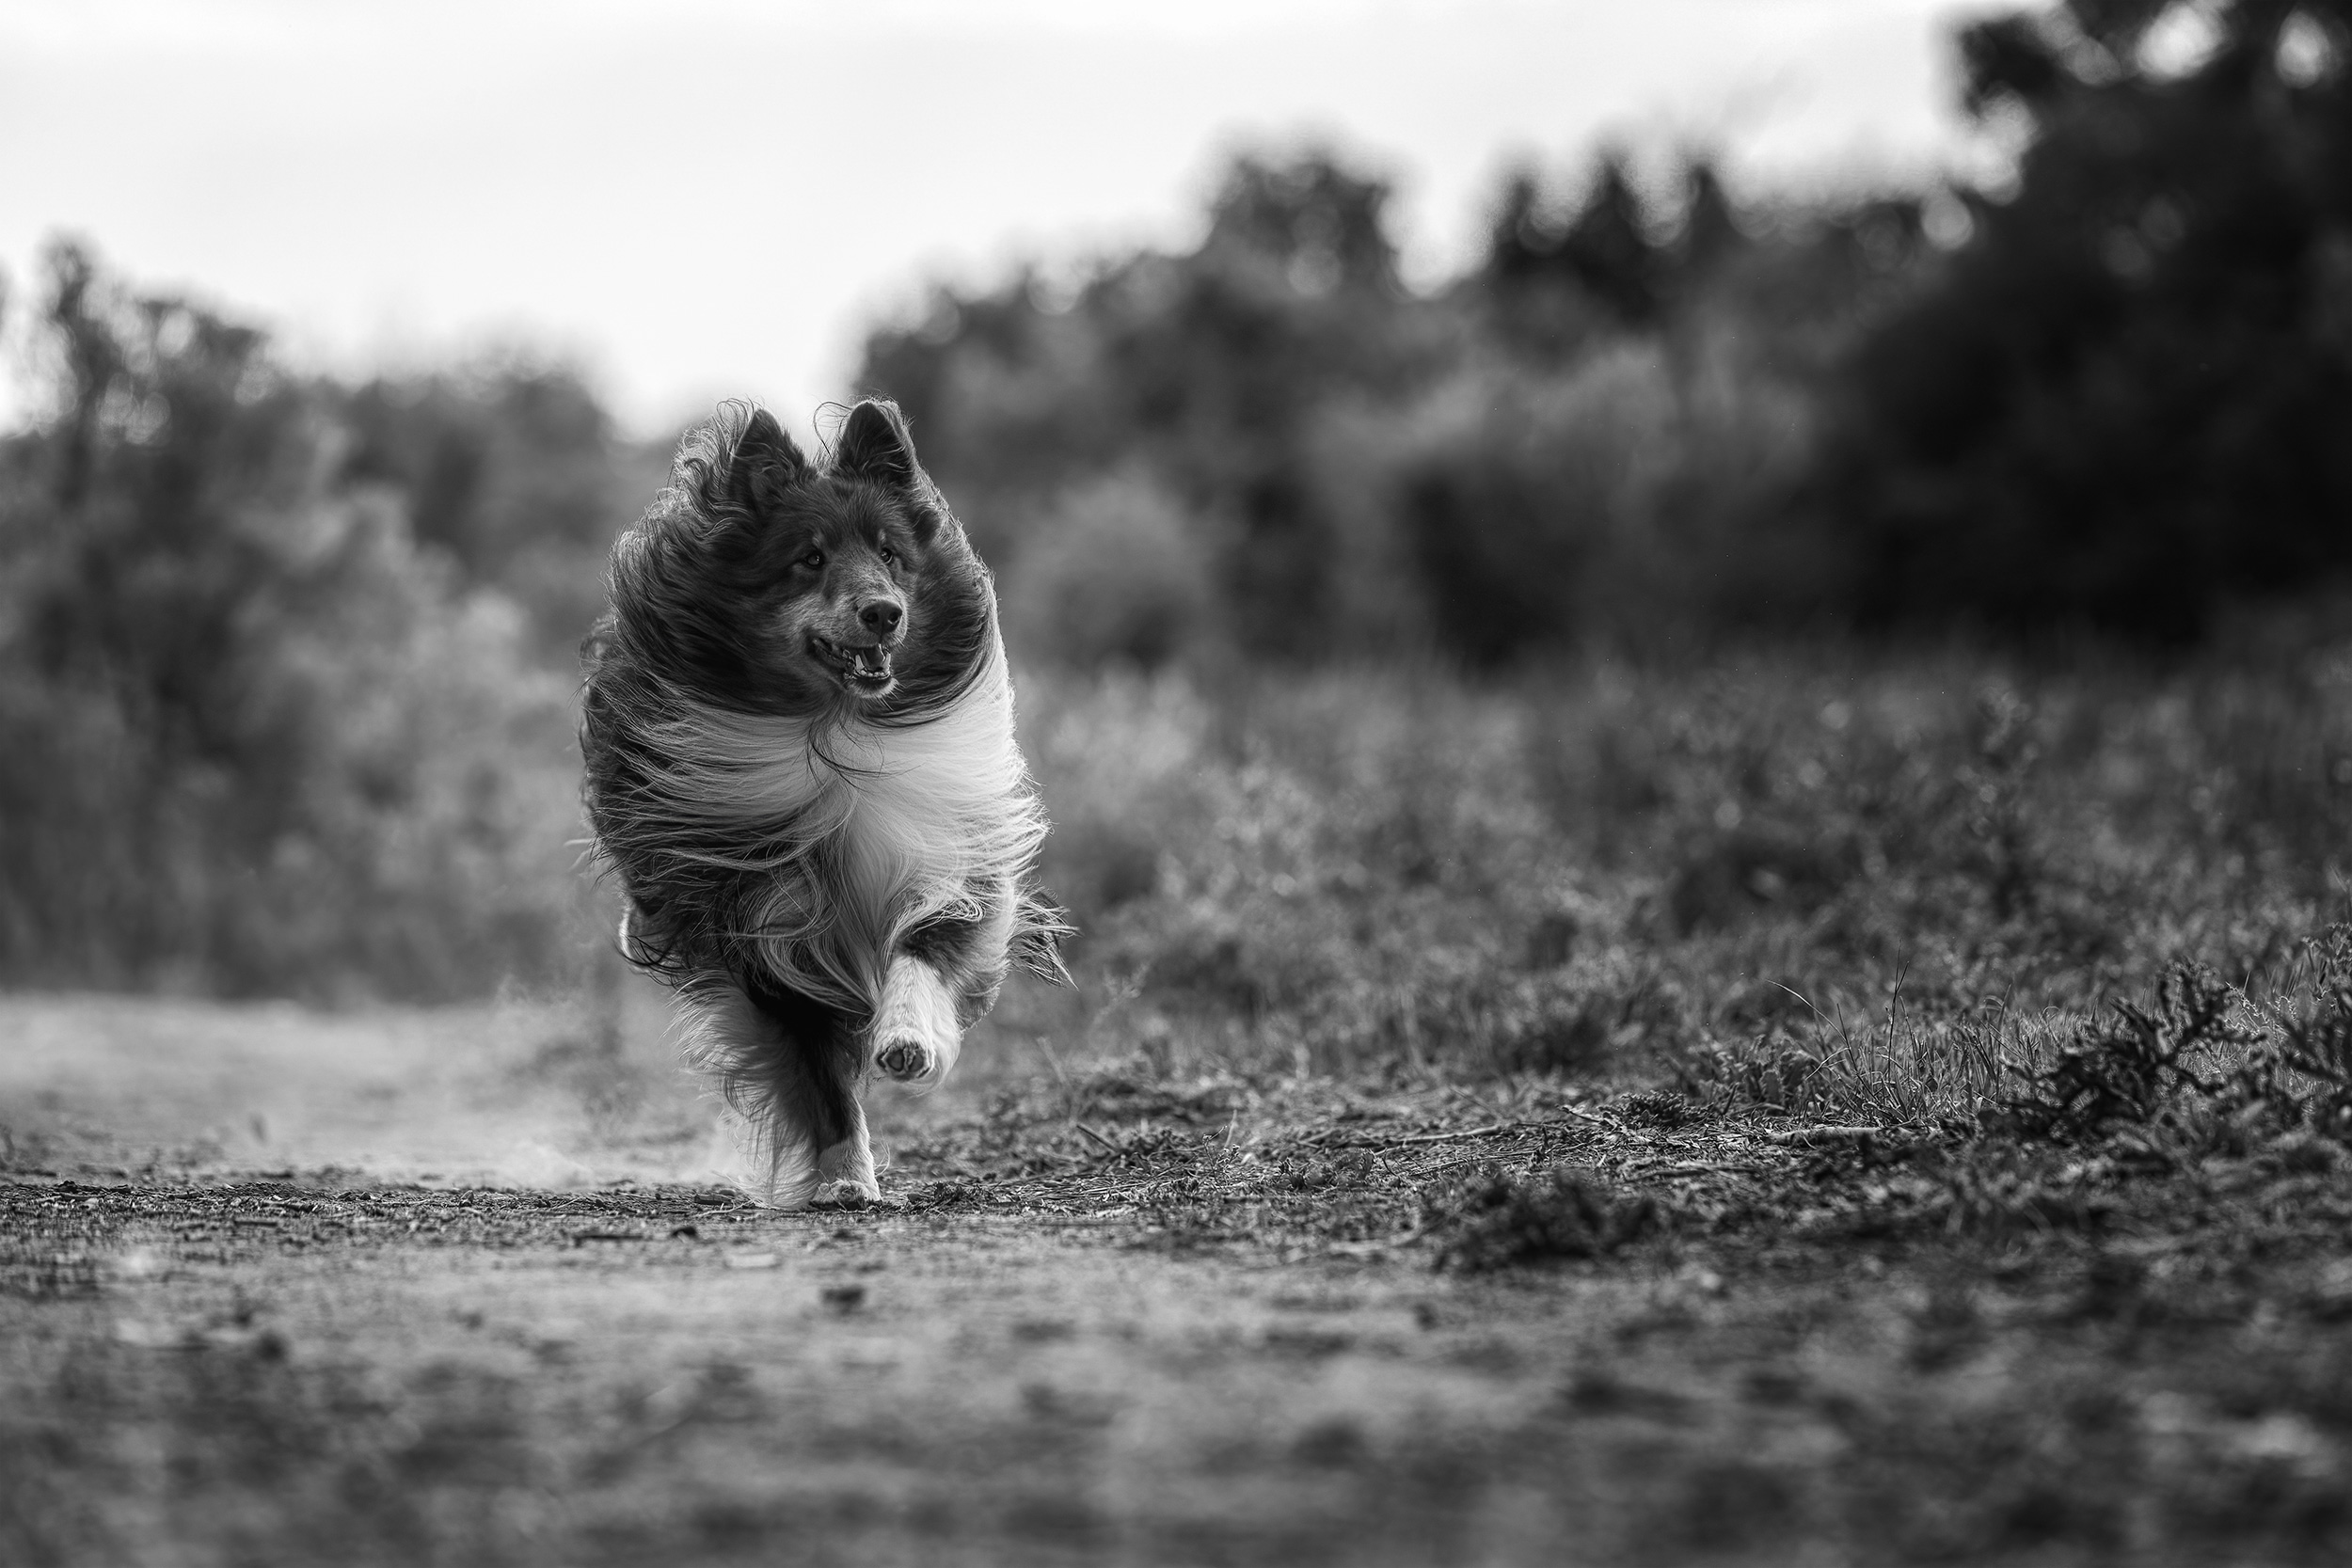 Shetland sheepdog  running towards camera on a dirt path. 